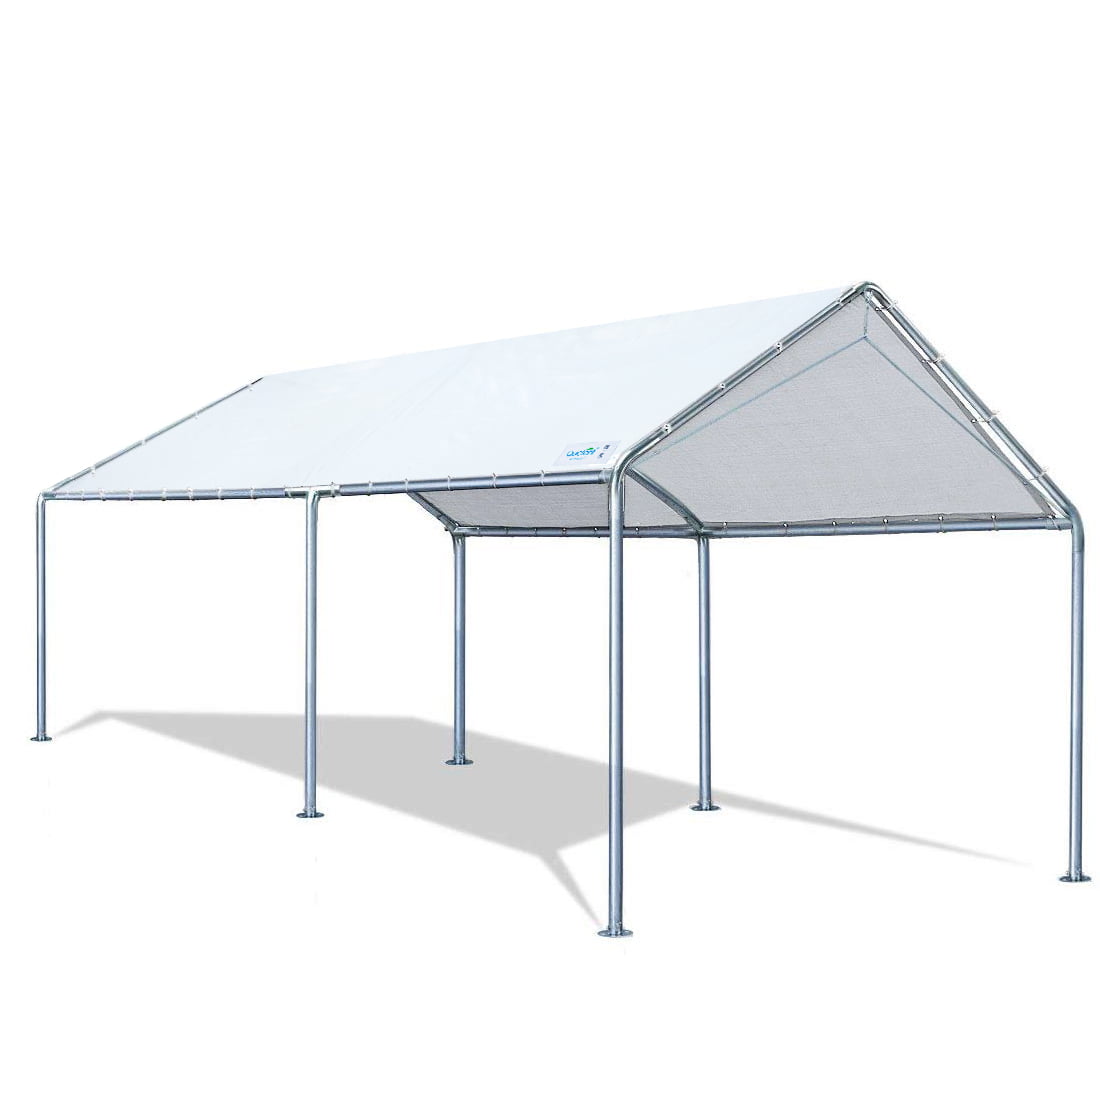 10 x 20Ft Steel Carport Car Port Canopy Tent Sun Shelter Canopy Heavy Duty White